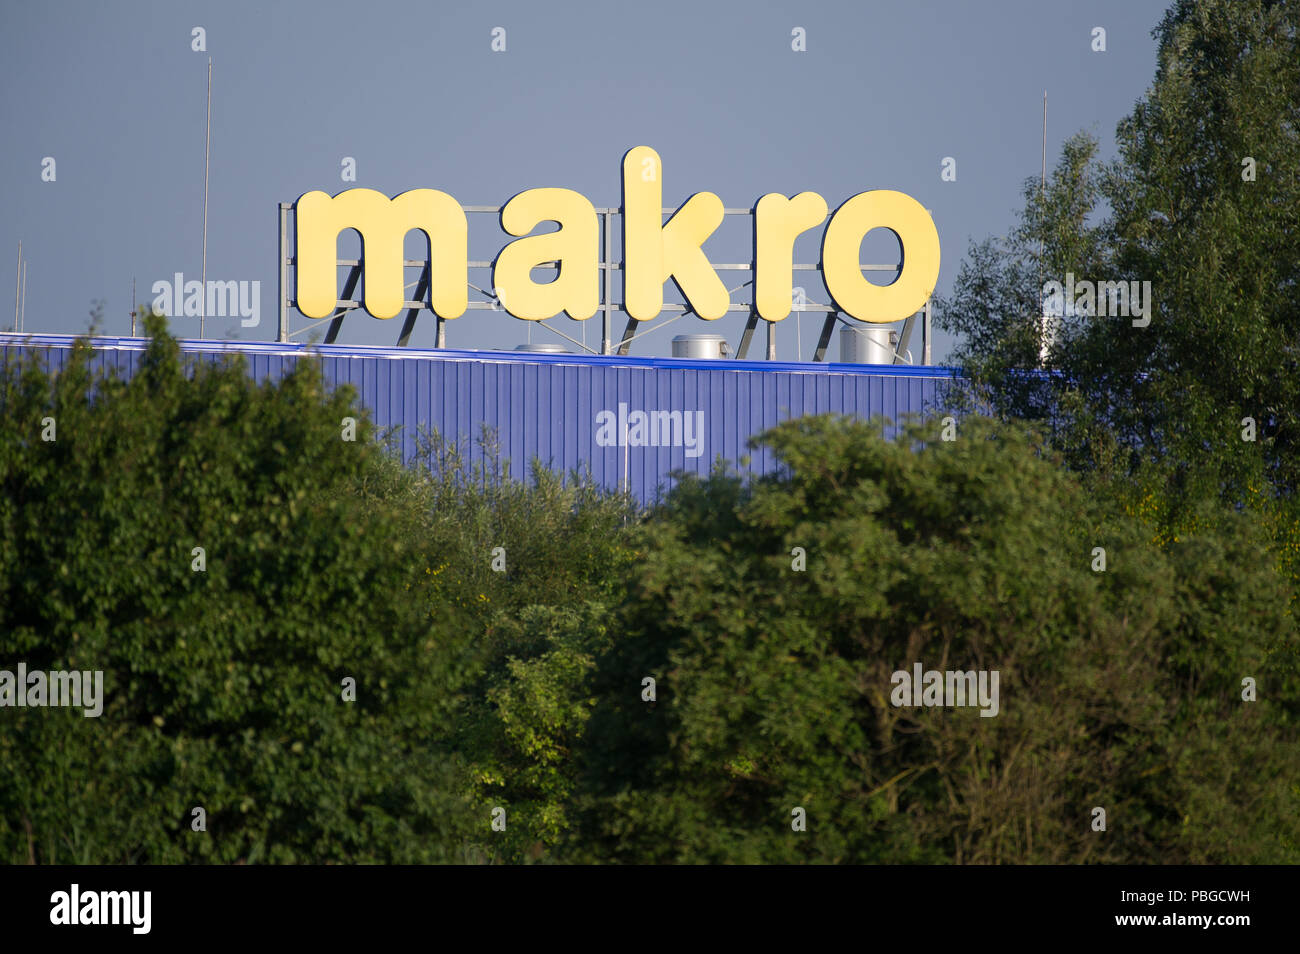 Makro Metro Cash und Carry in Danzig, Polen. Juli 22 2018 © wojciech Strozyk/Alamy Stock Foto Stockfoto